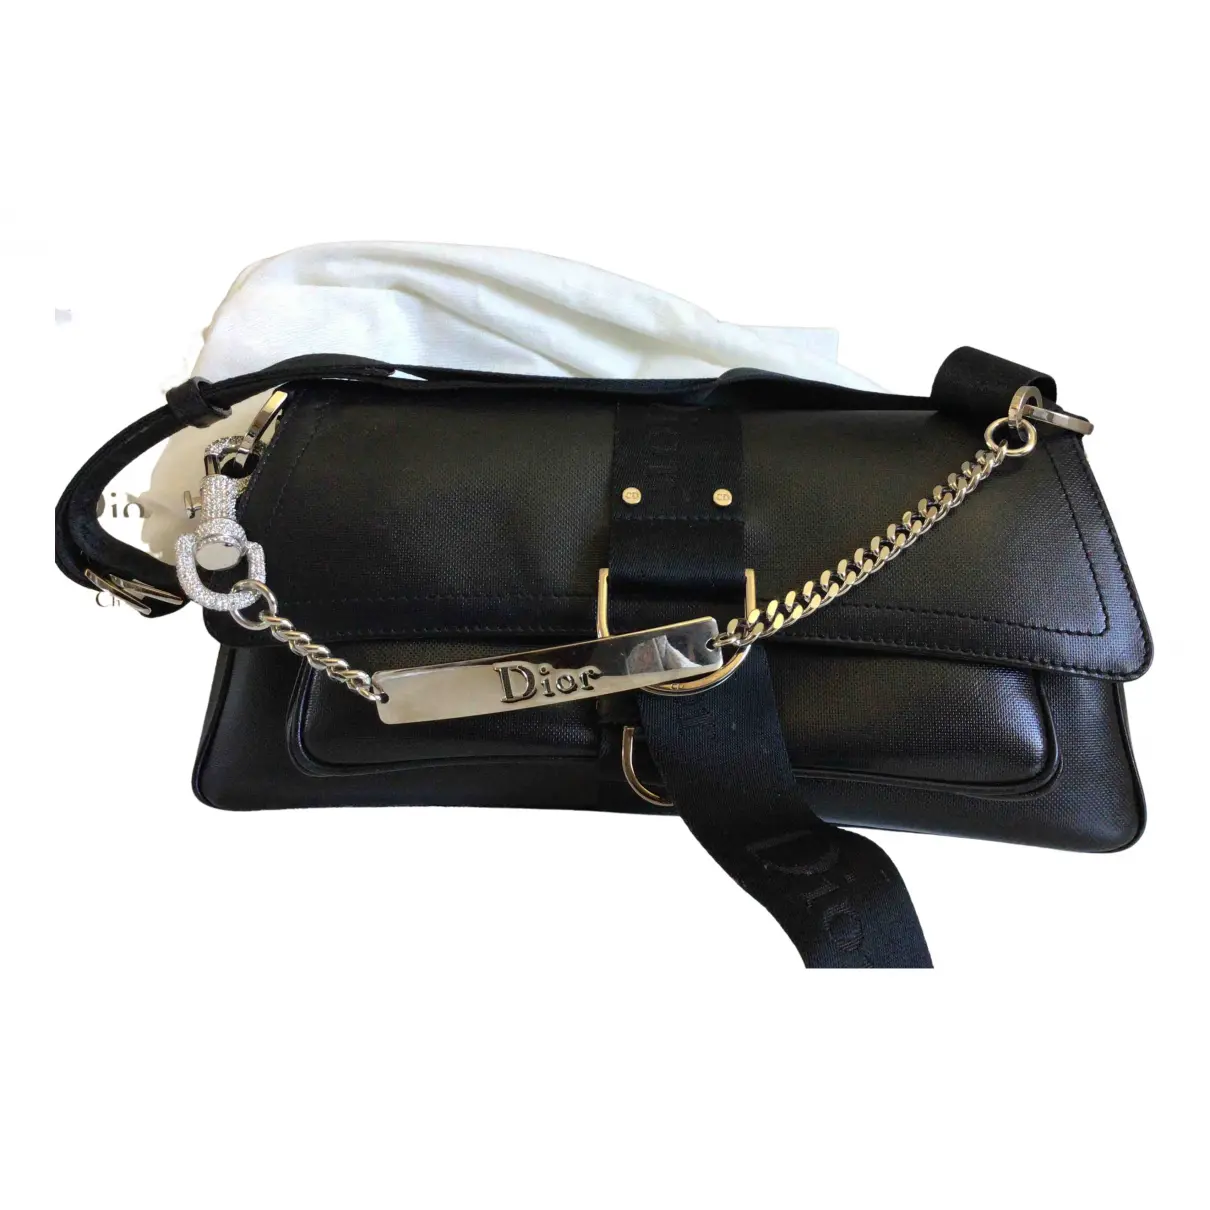 Hardcore leather handbag Dior